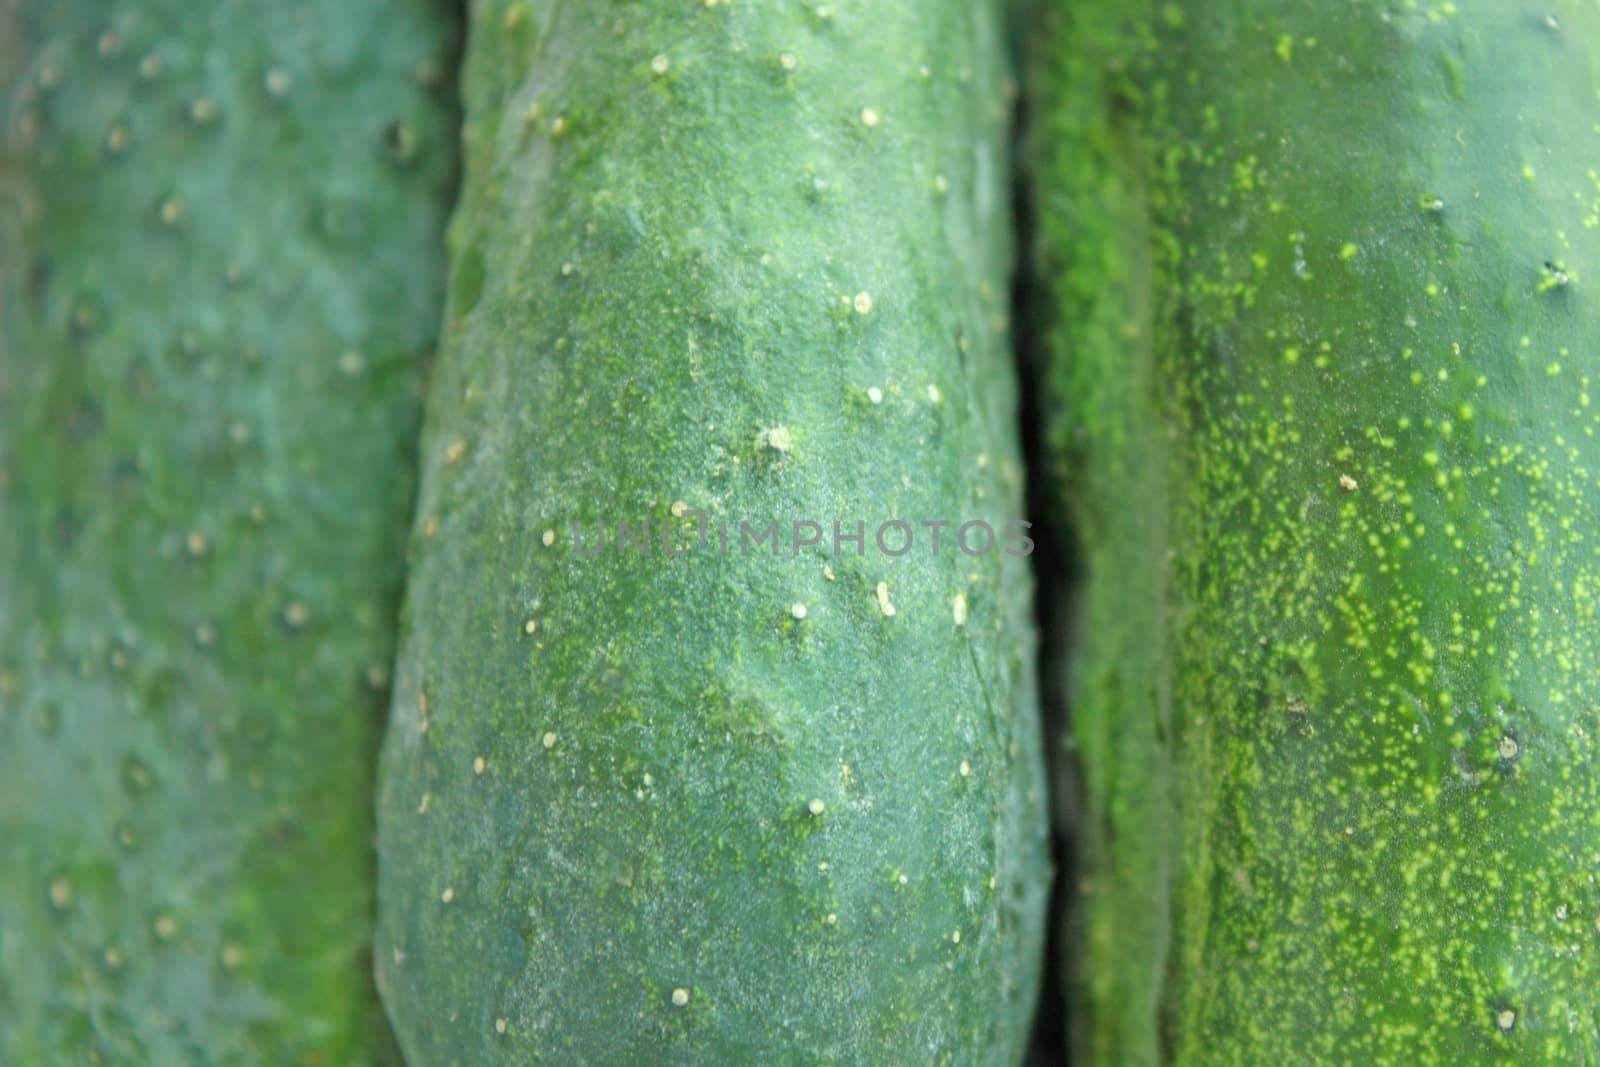 Cucumbers by Lessadar